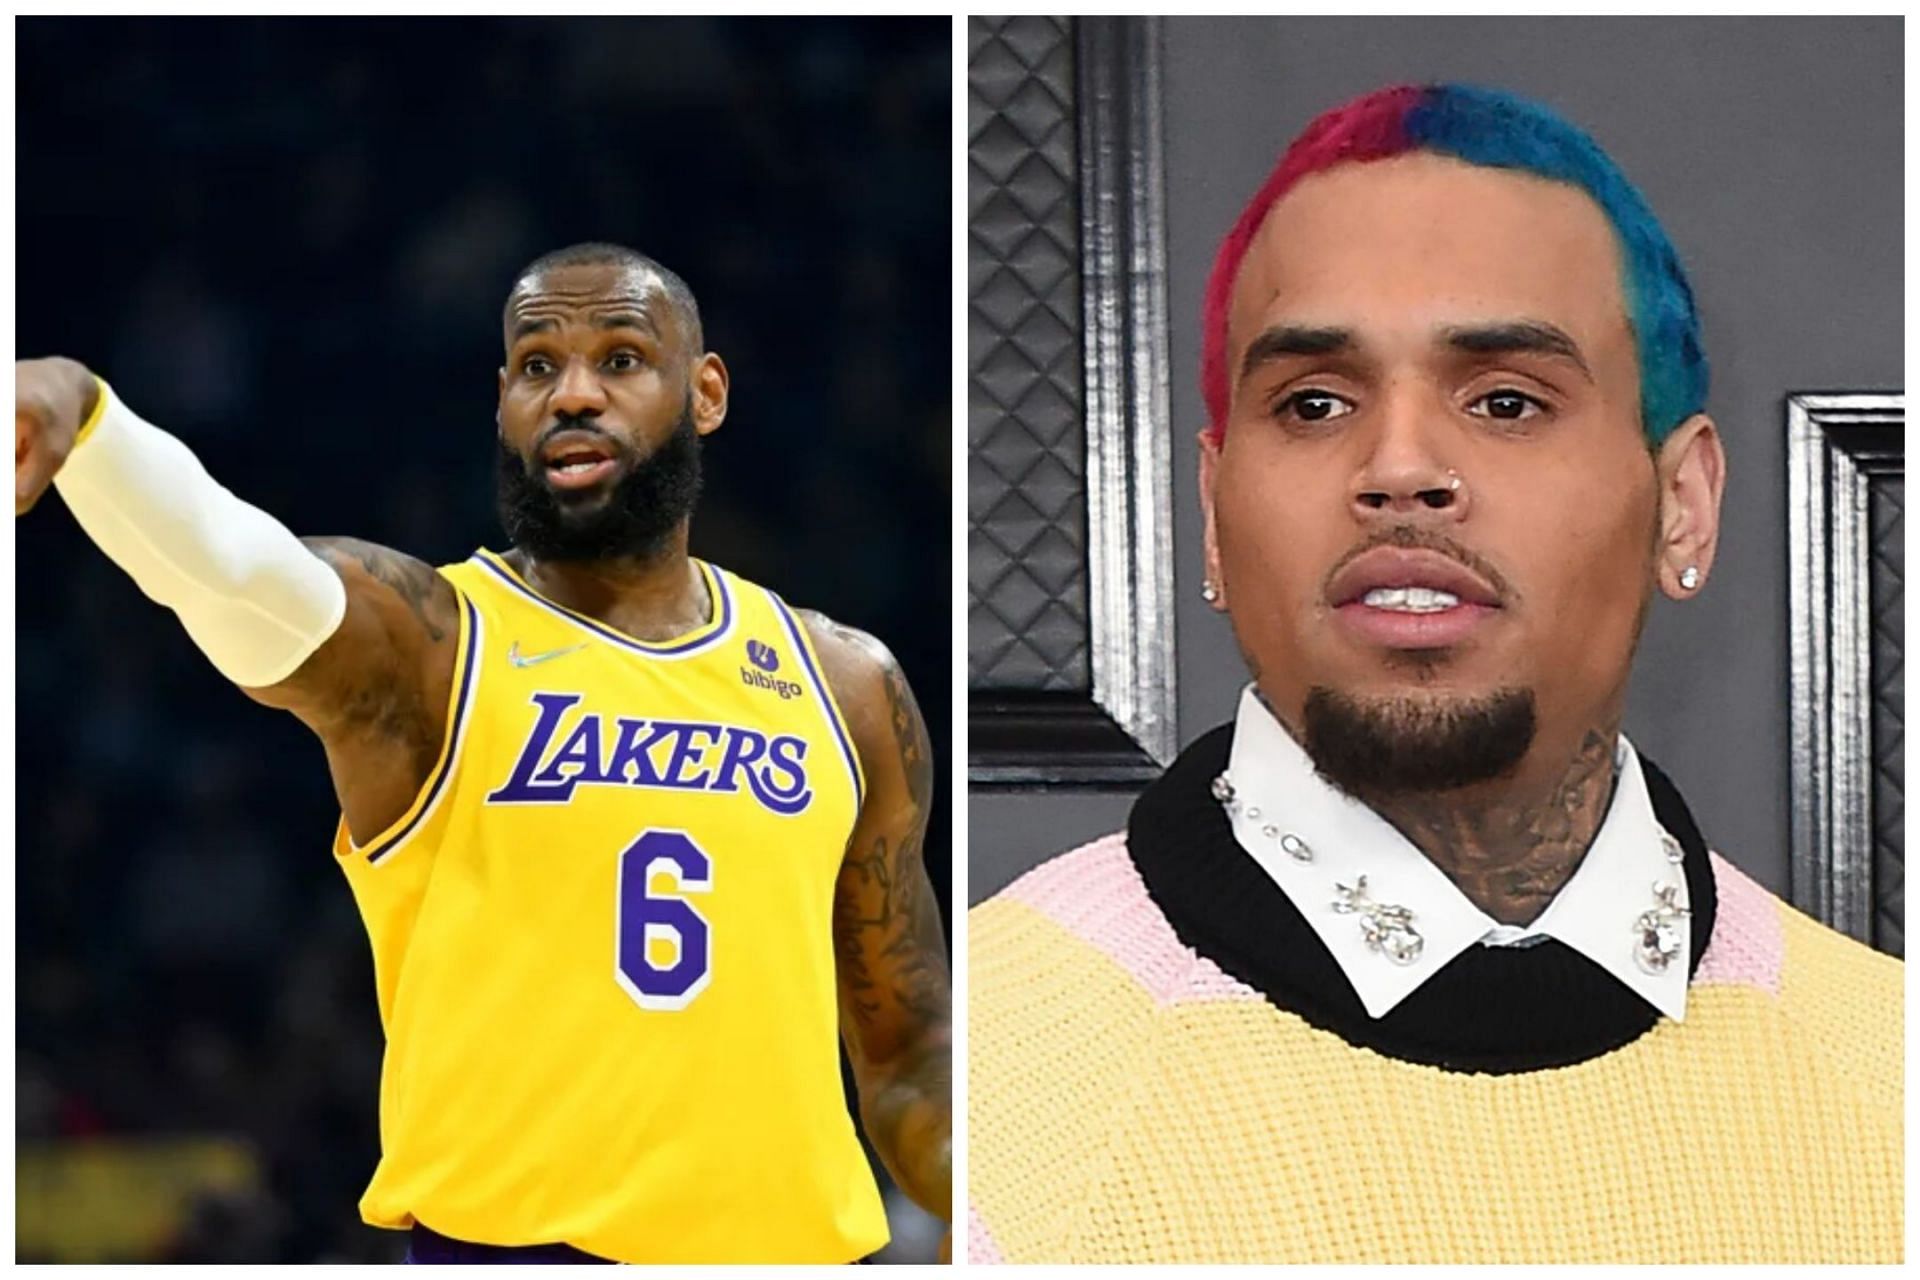 NBA superstar LeBron James and famous rapper Chris Brown